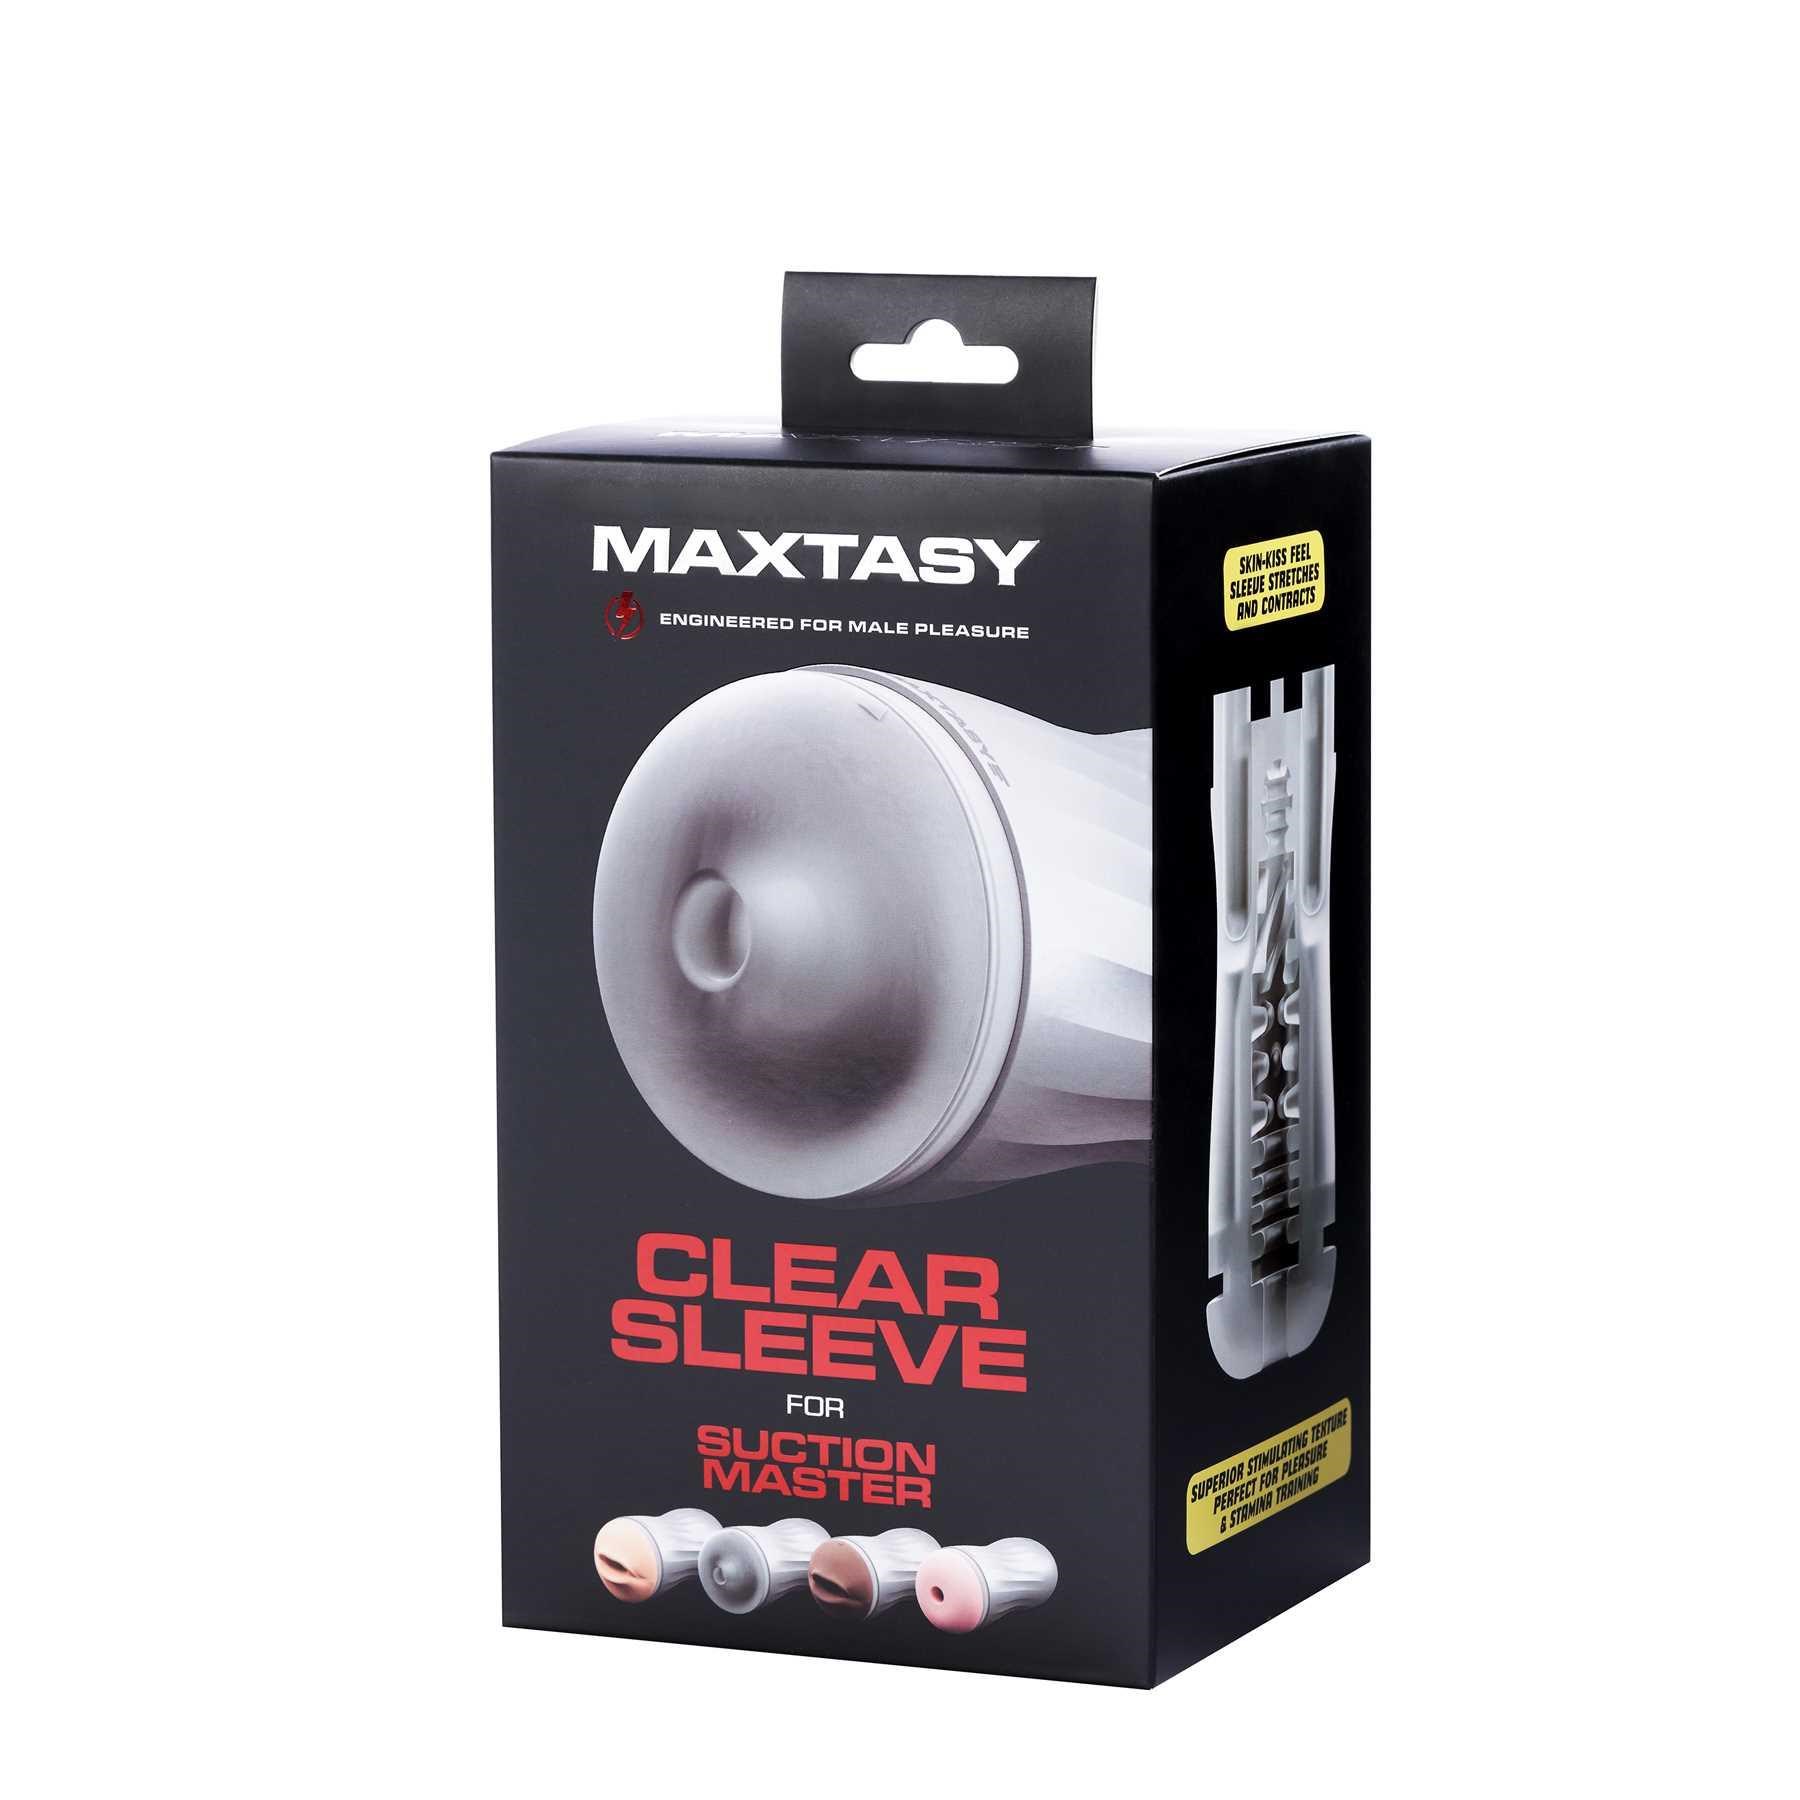 Maxtasy suction master standard clear sleeve box